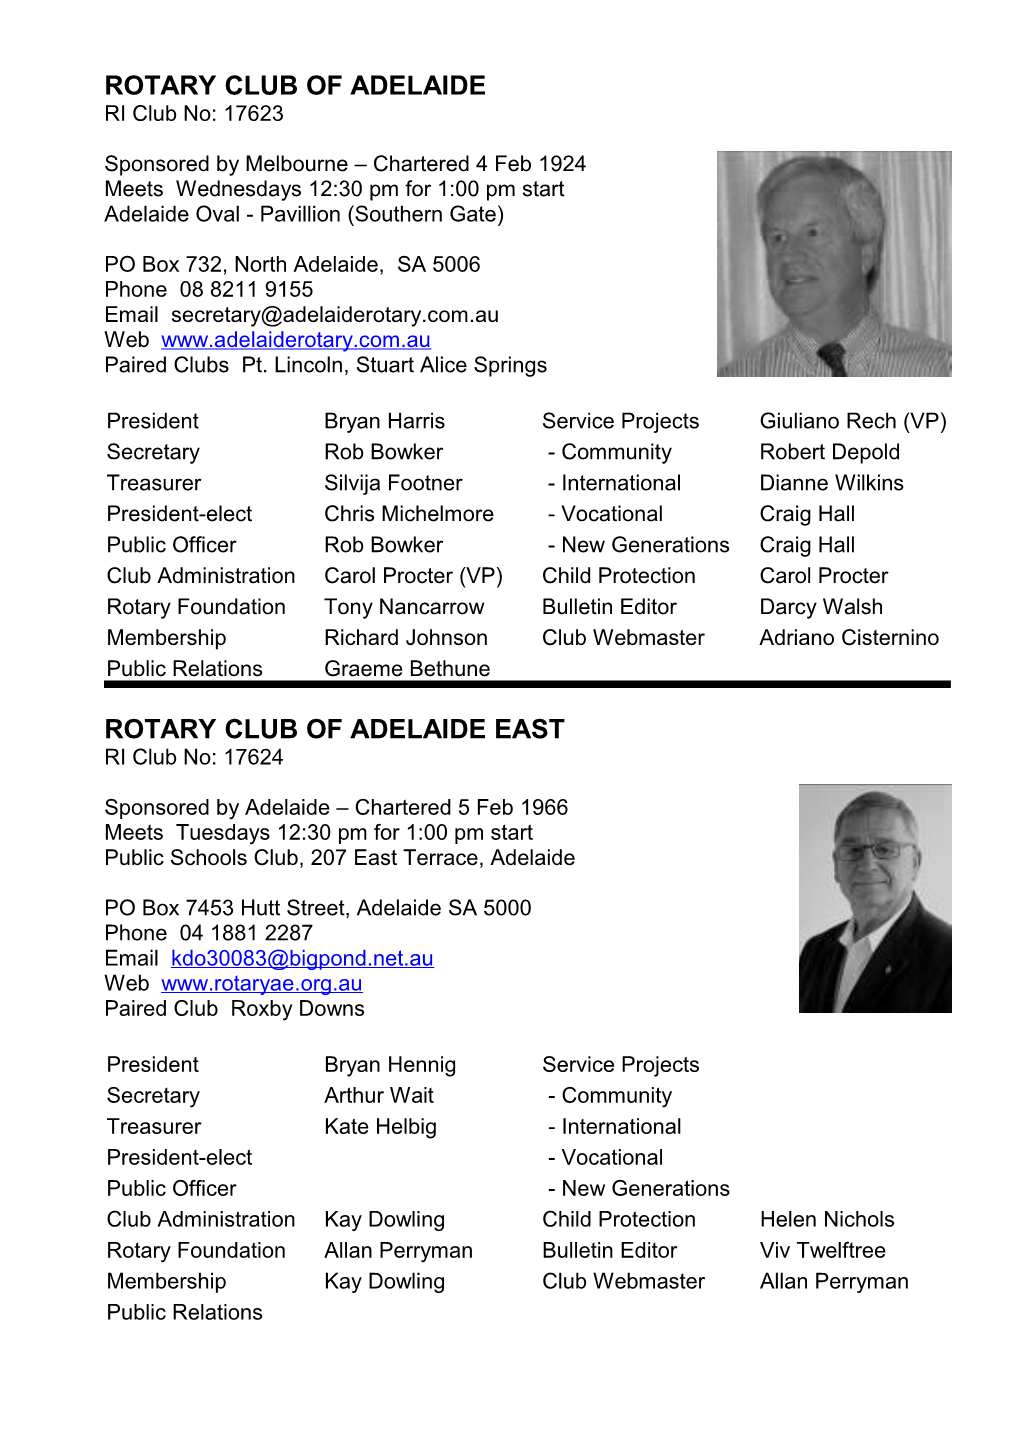 Rotary Club of Adelaide